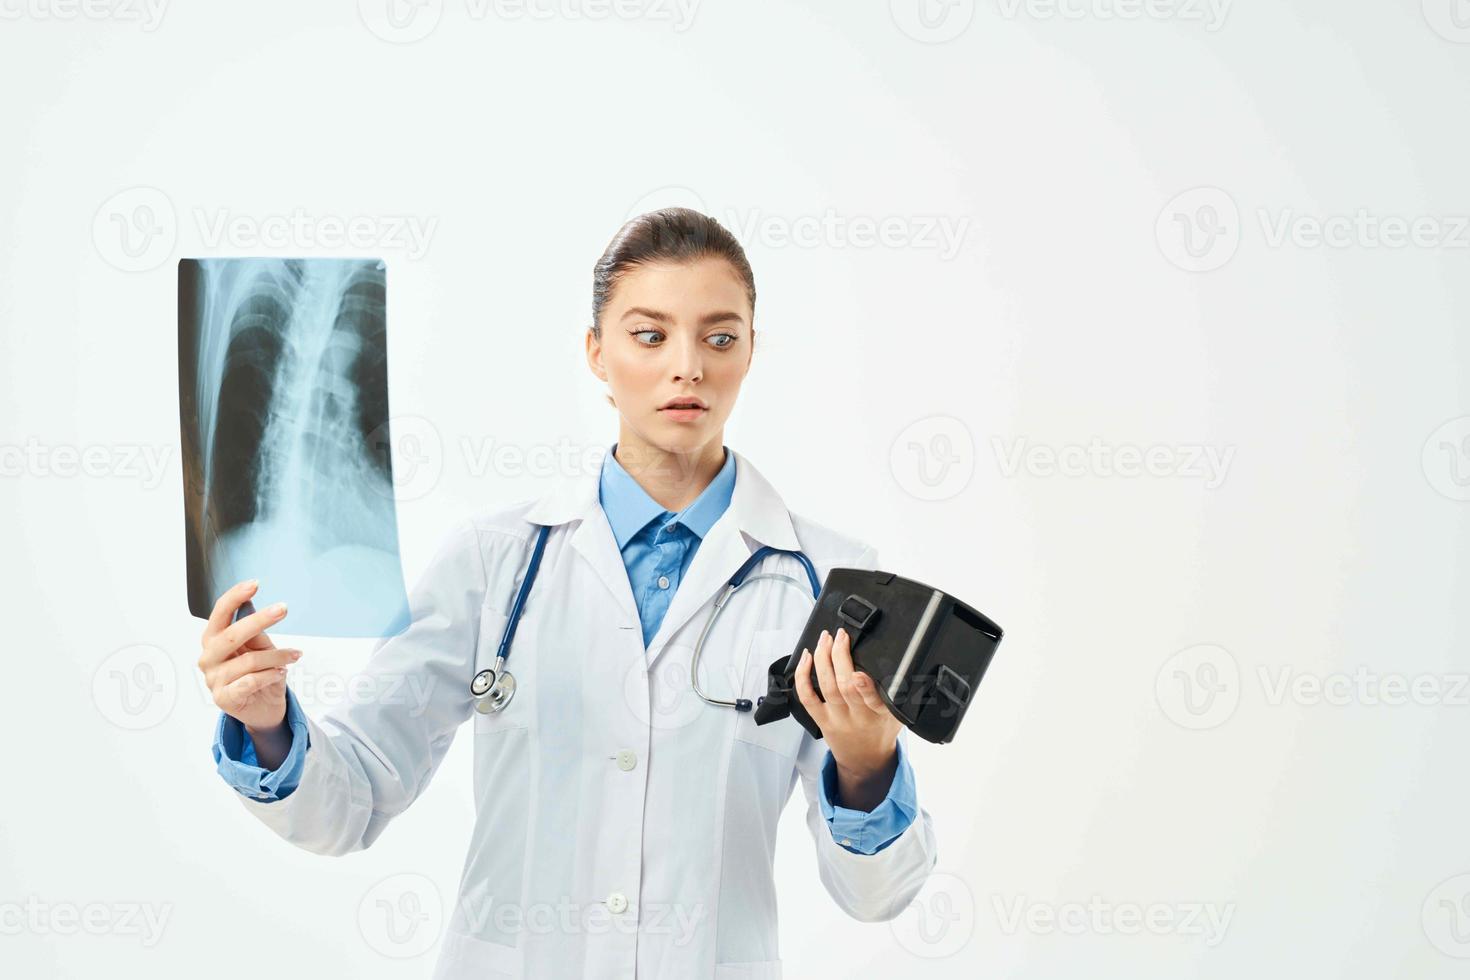 donna medico ospedale bianca cappotto ricerca Salute radiologo foto